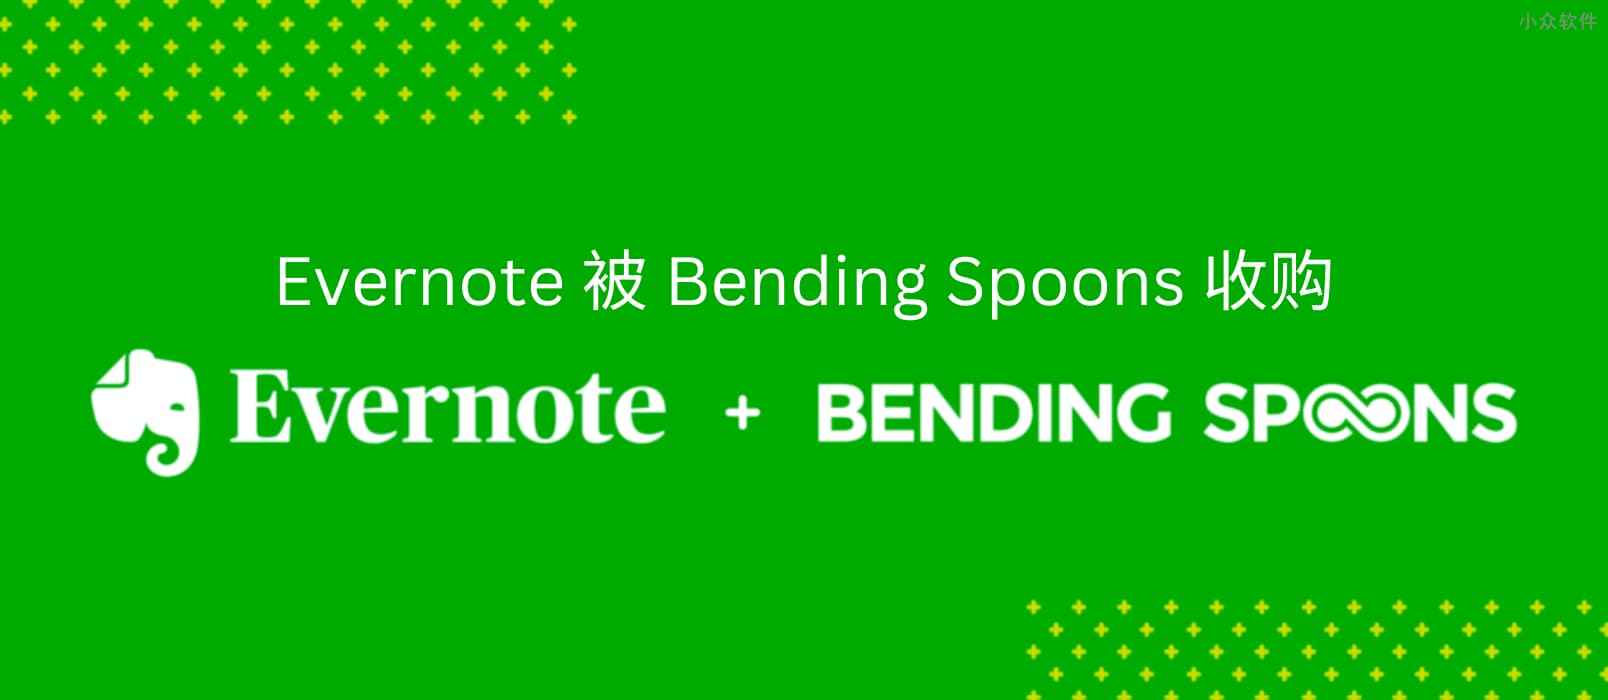 Evernote 被 Bending Spoons 收购 19